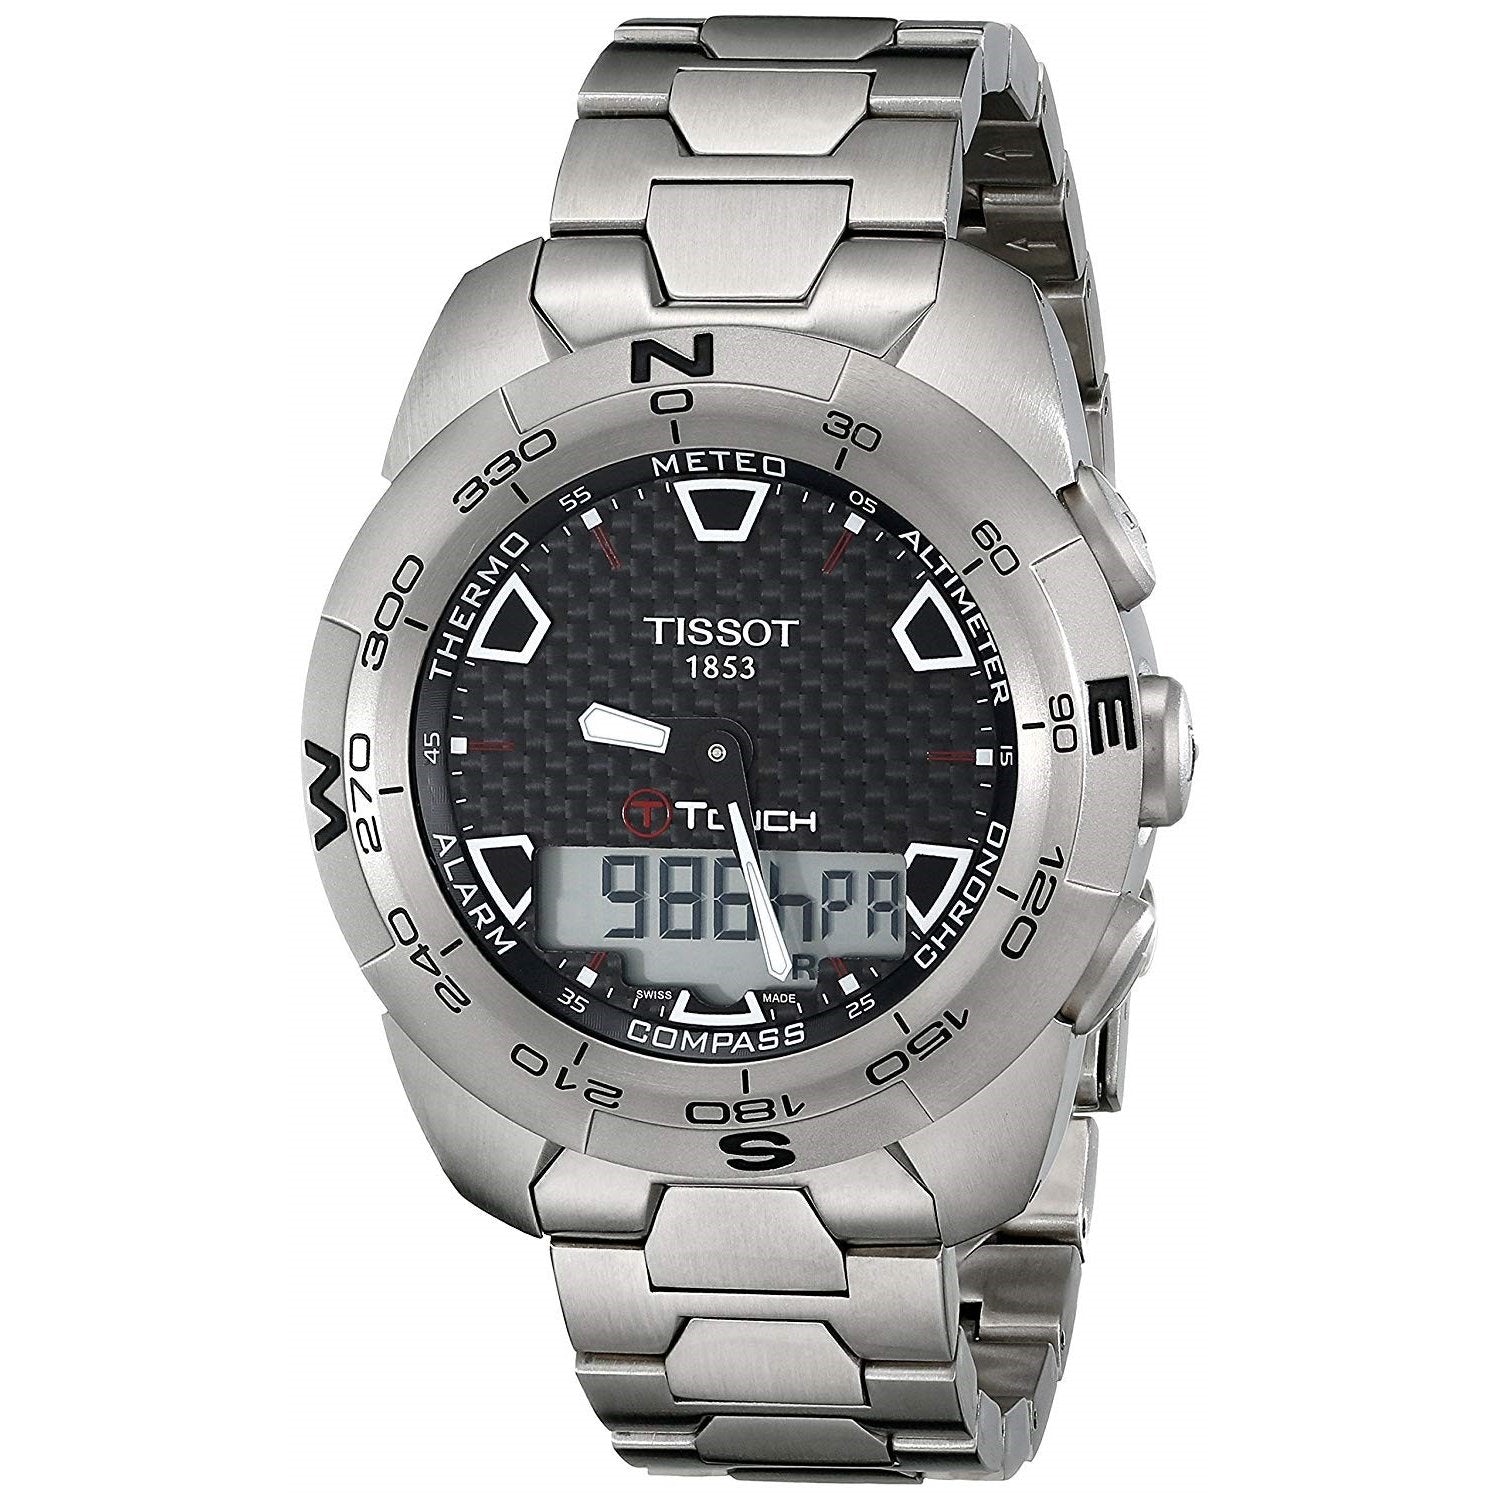 Tissot Men's T0134204420100 T-Touch Expert Analog-Digital Titanium Watch